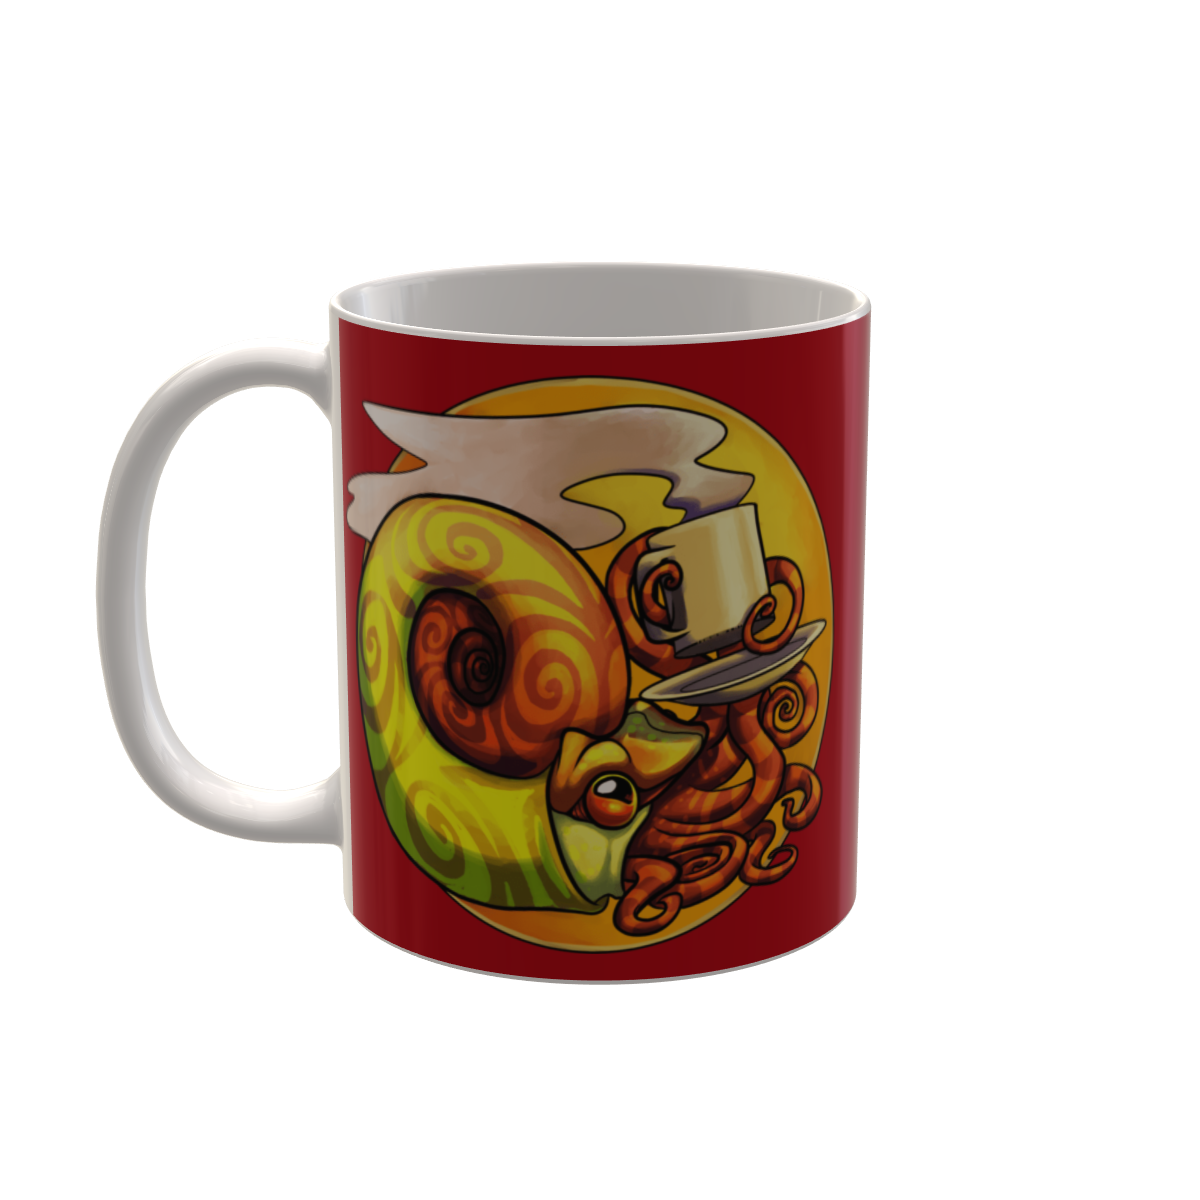 A mug with a cartoony ammonite illustration on it